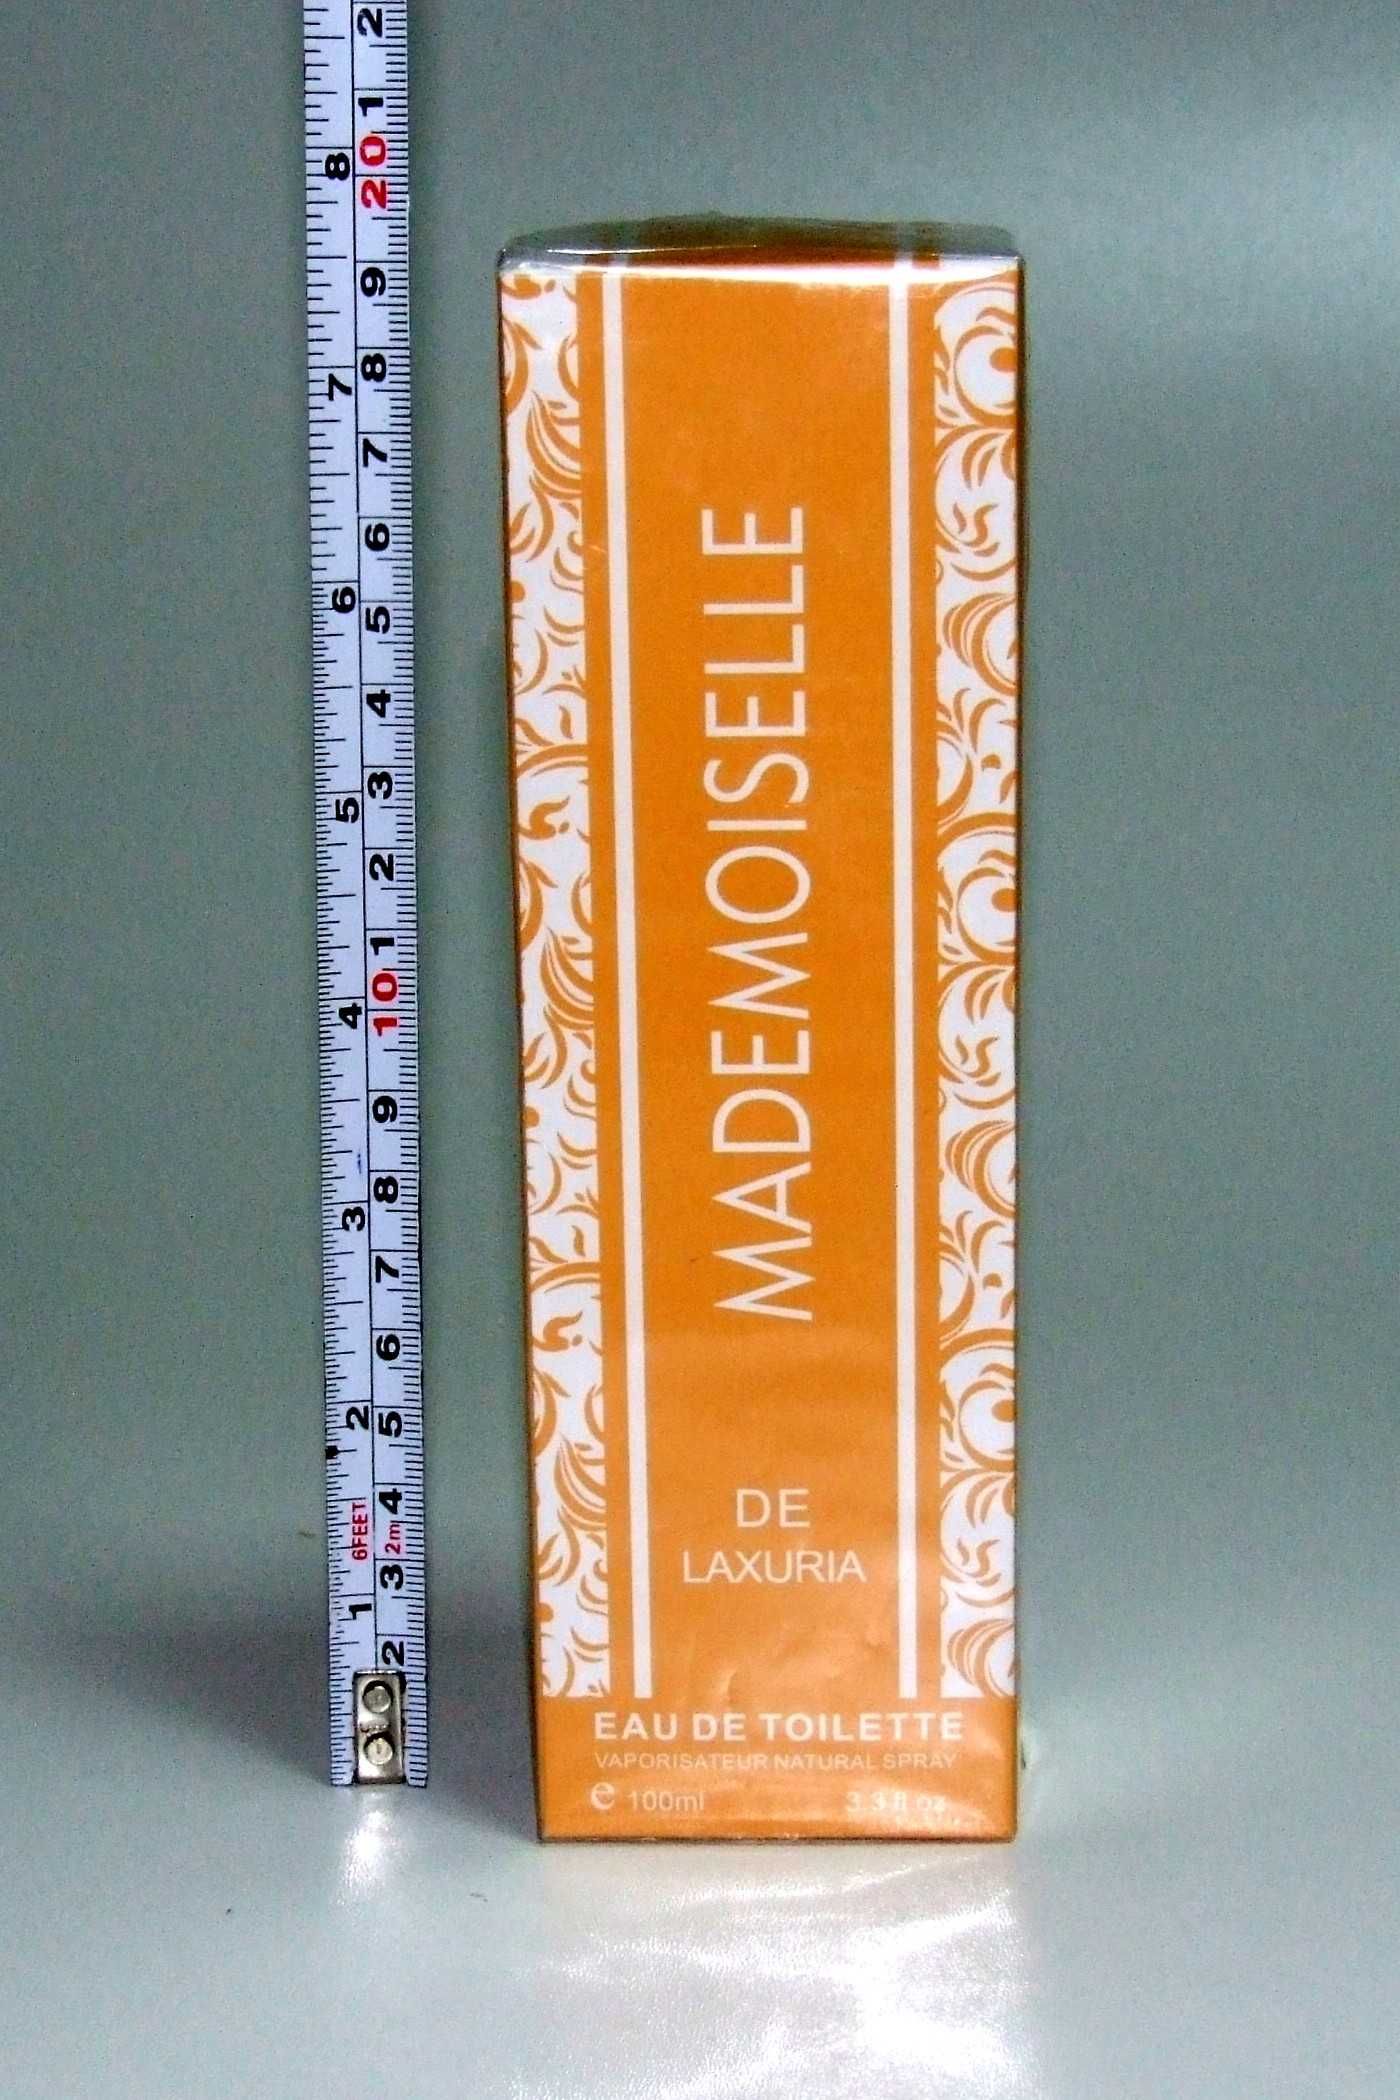 Parfum (Eau de toilette) "Mademoiselle", Made in France, SIGILAT